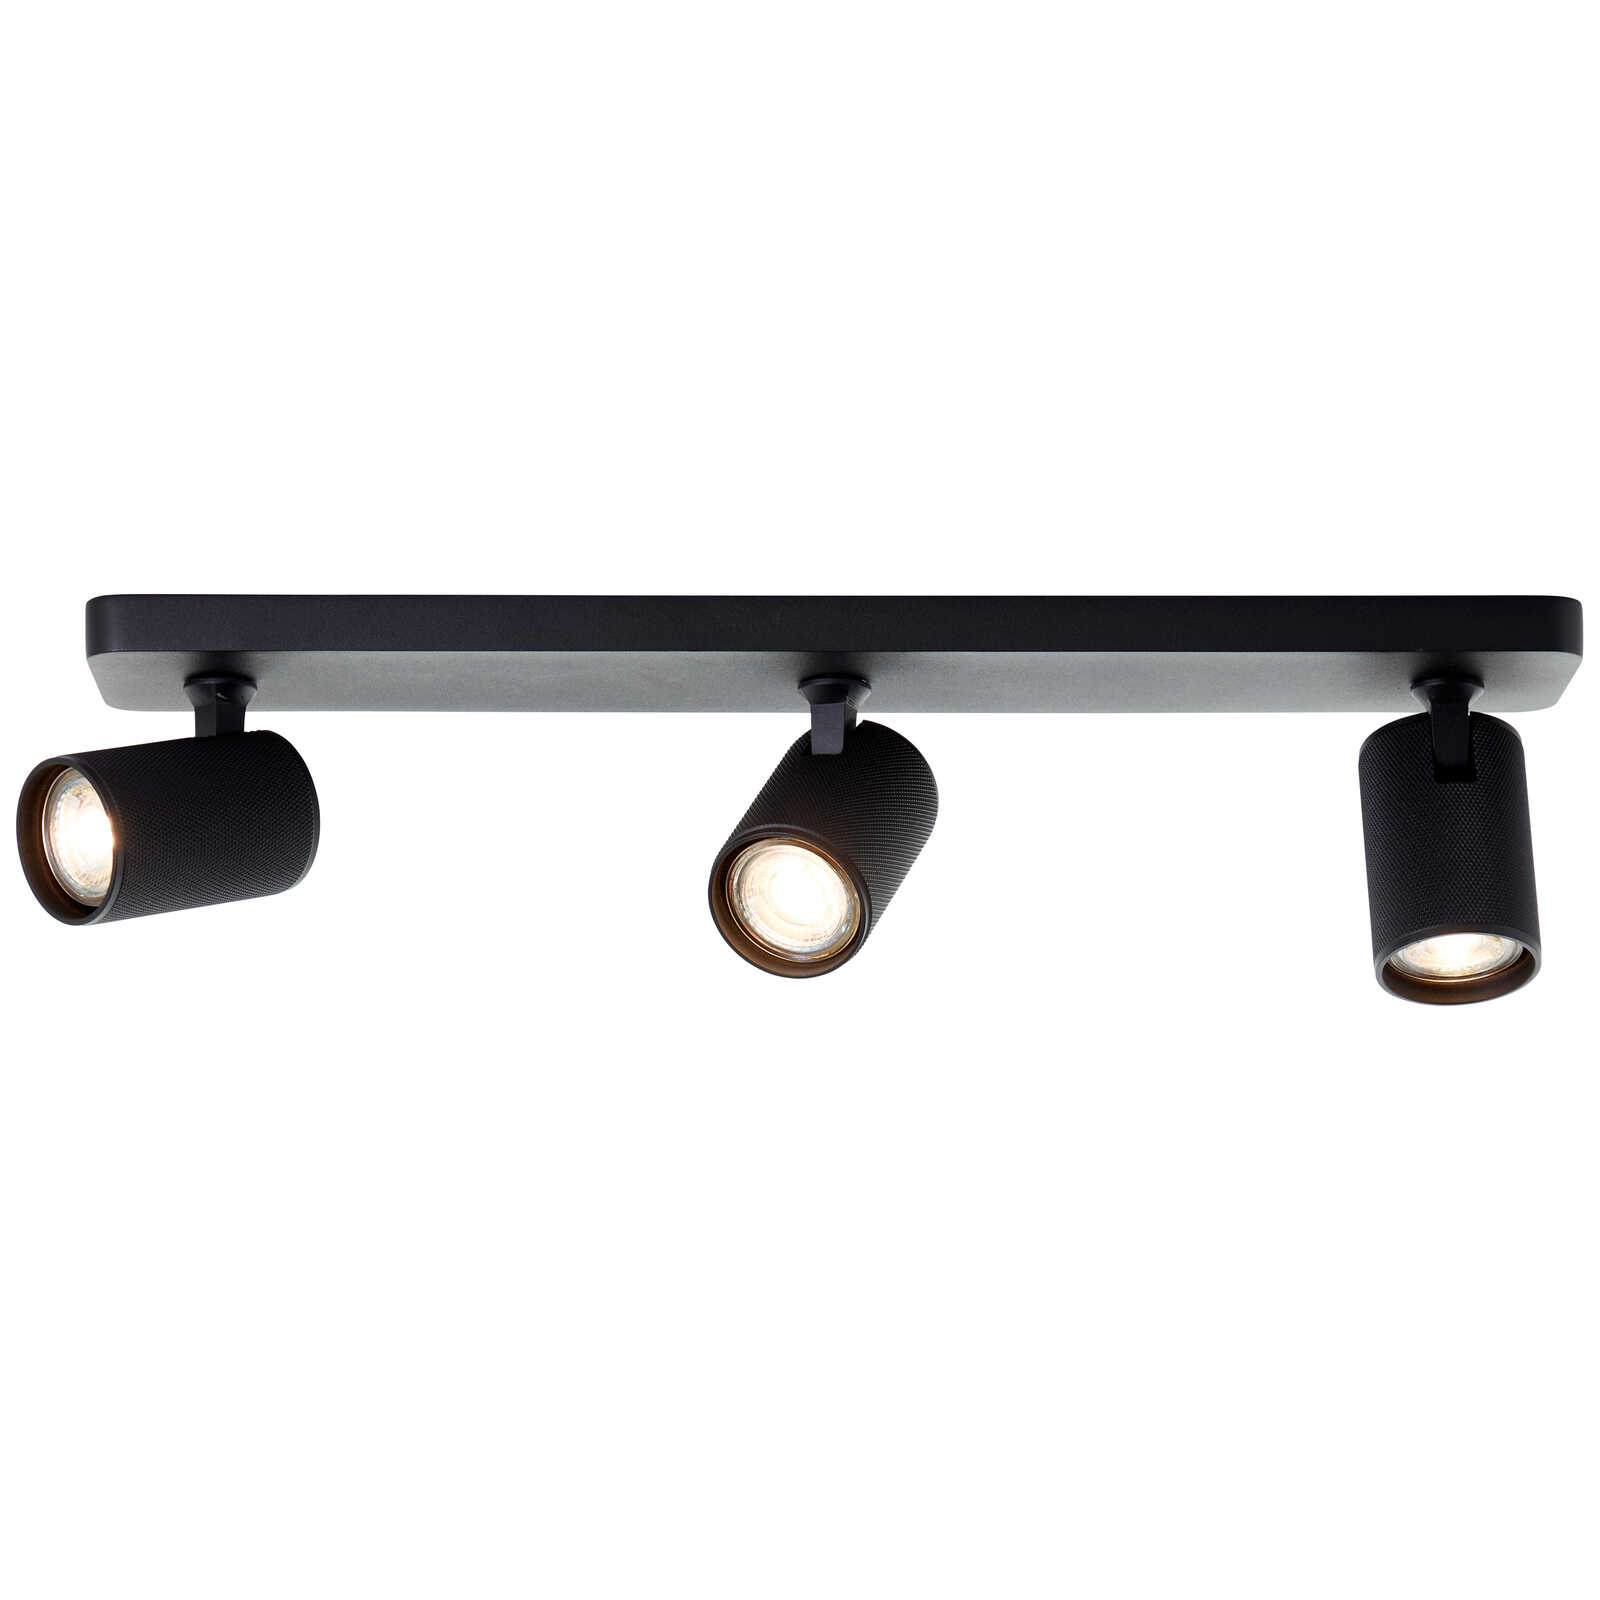             Metal spotlight bar - Leonardo 3 - Black
        